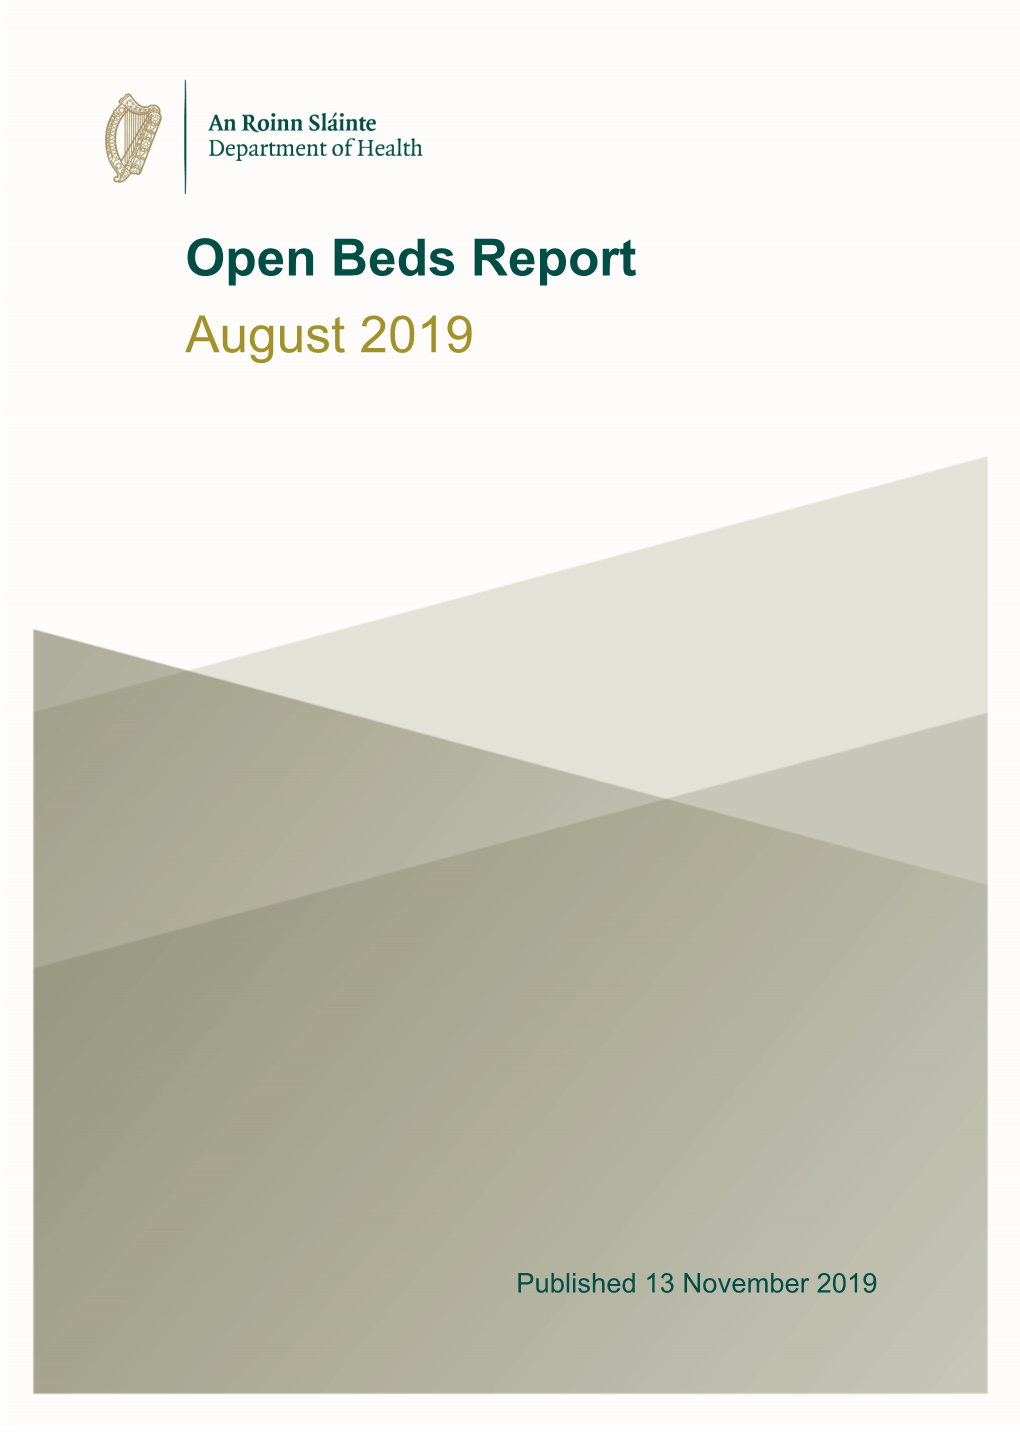 Open Beds Report August 2019